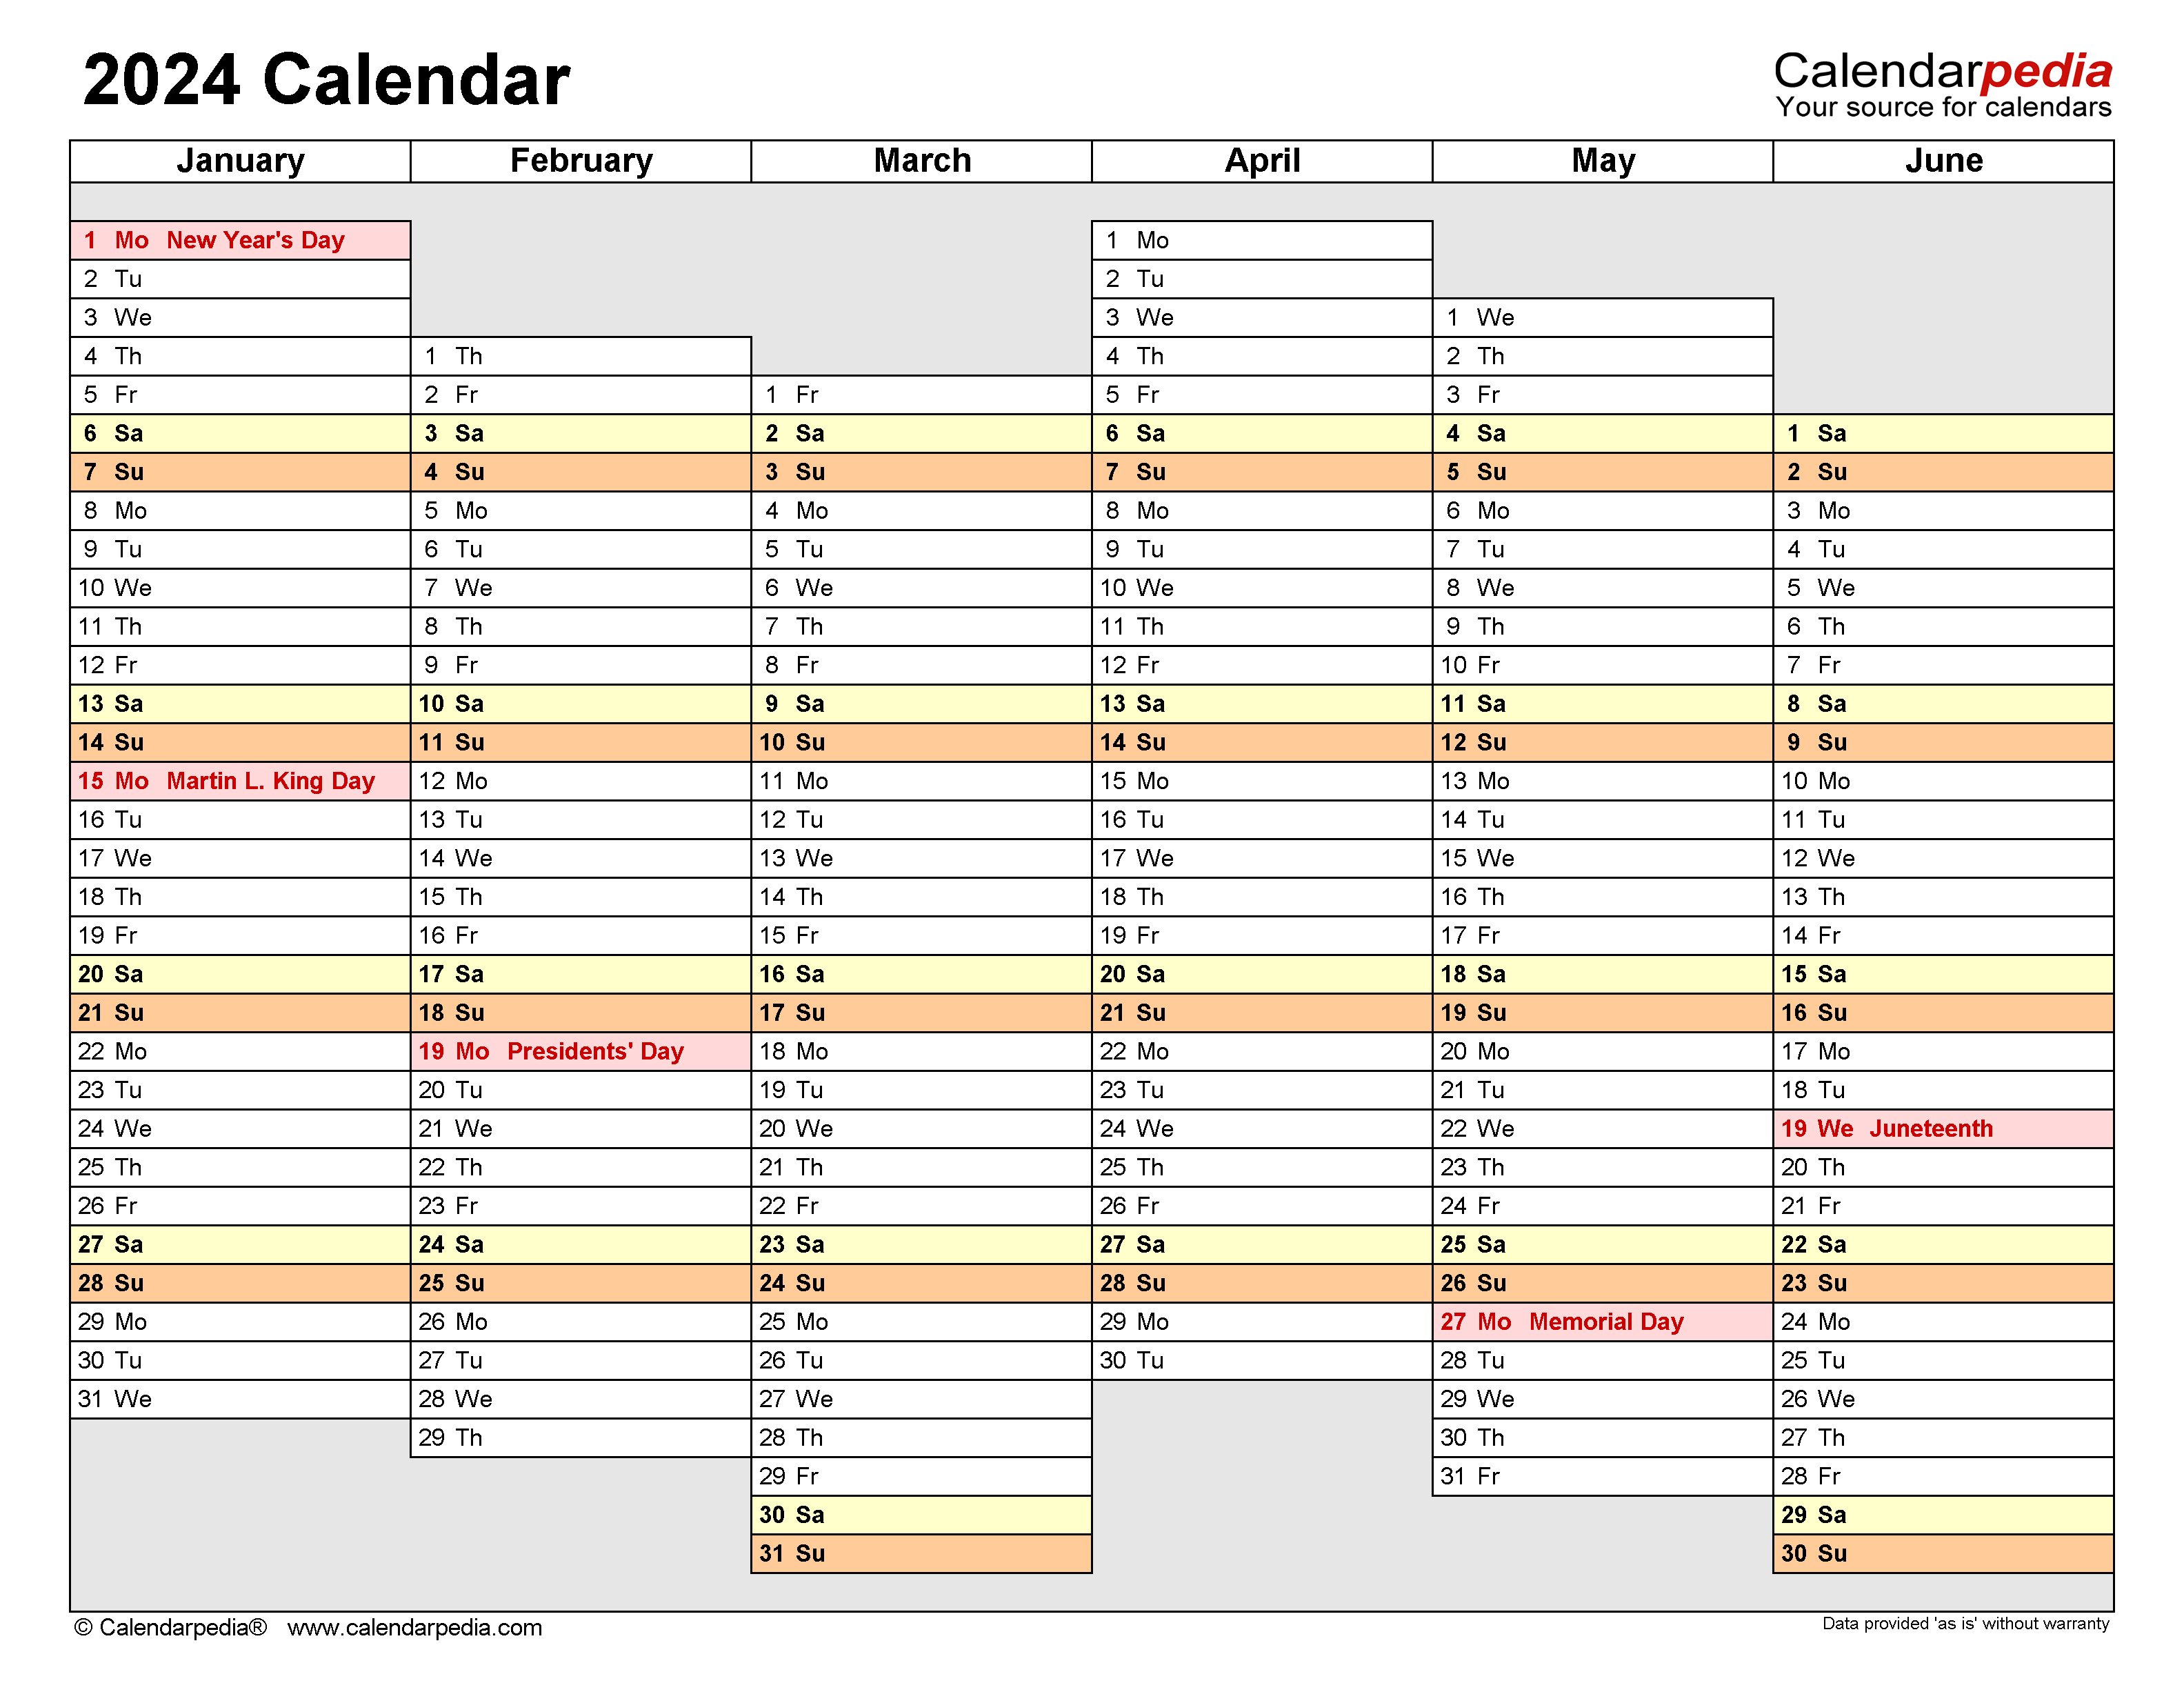 2024 Calendar - Free Printable Excel Templates - Calendarpedia for Free Printable Planning Calendar 2024